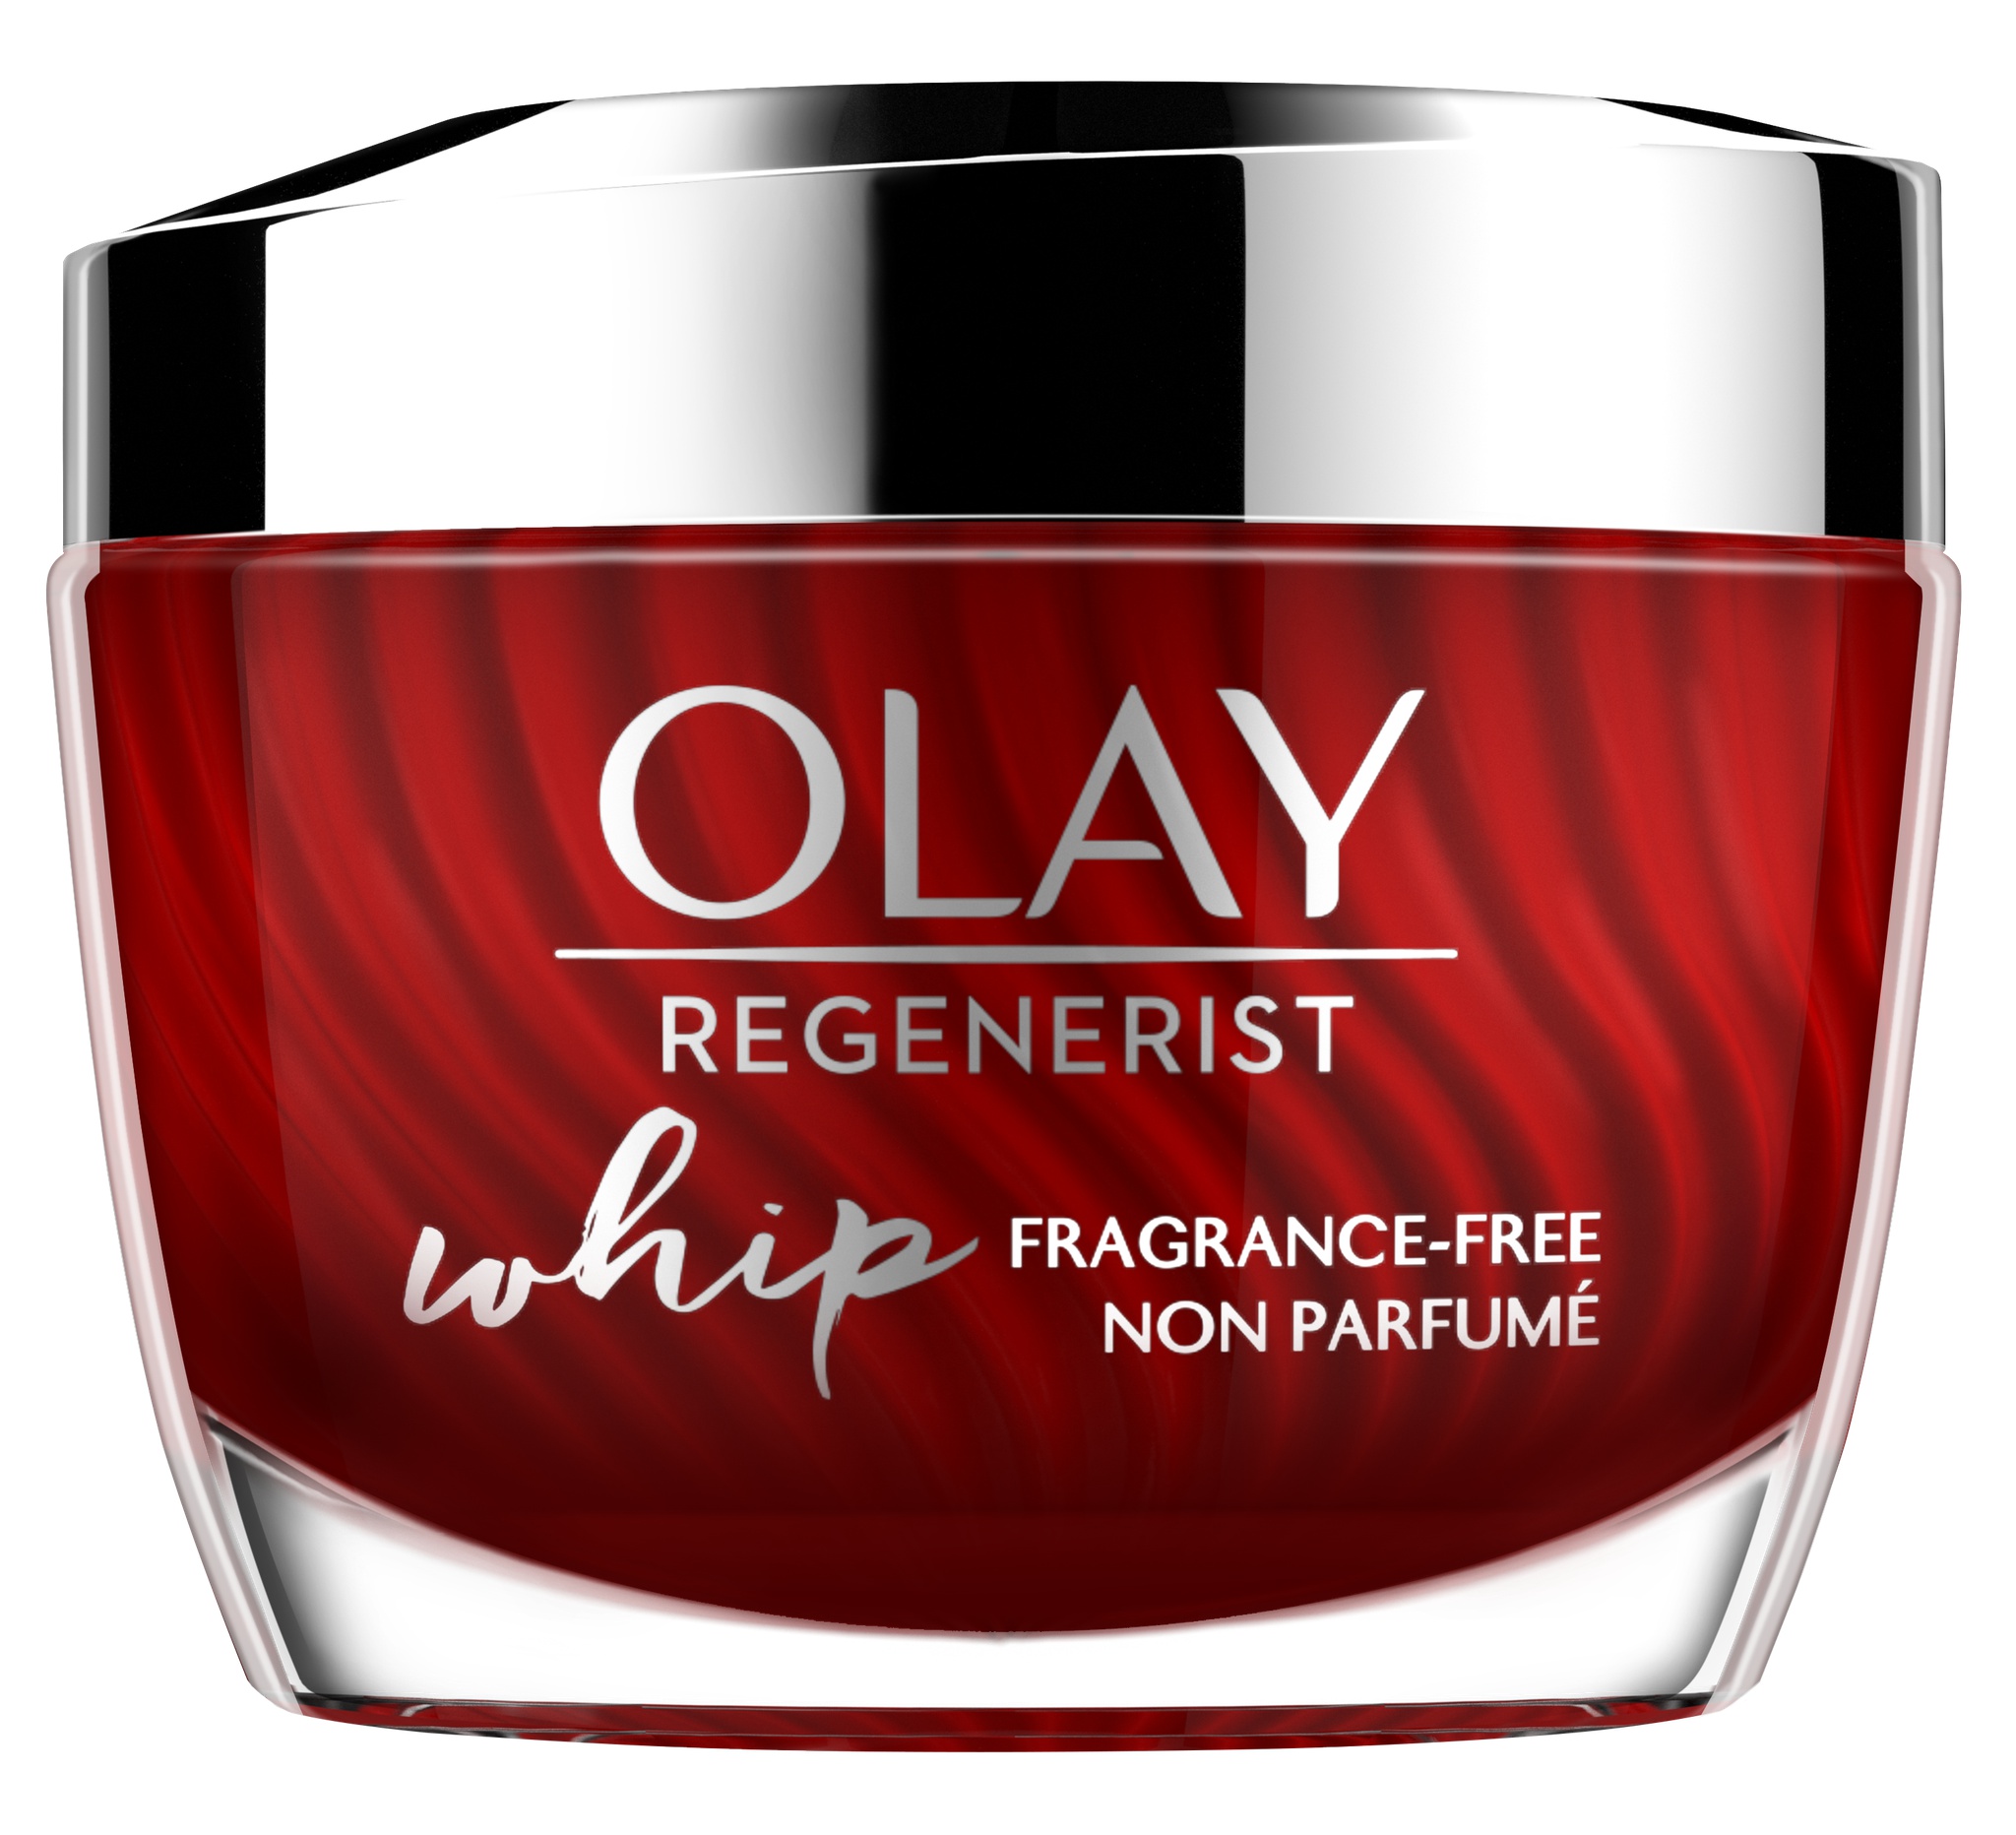 Olay Regenerist Whip Face Moisturizer Fragrance-free